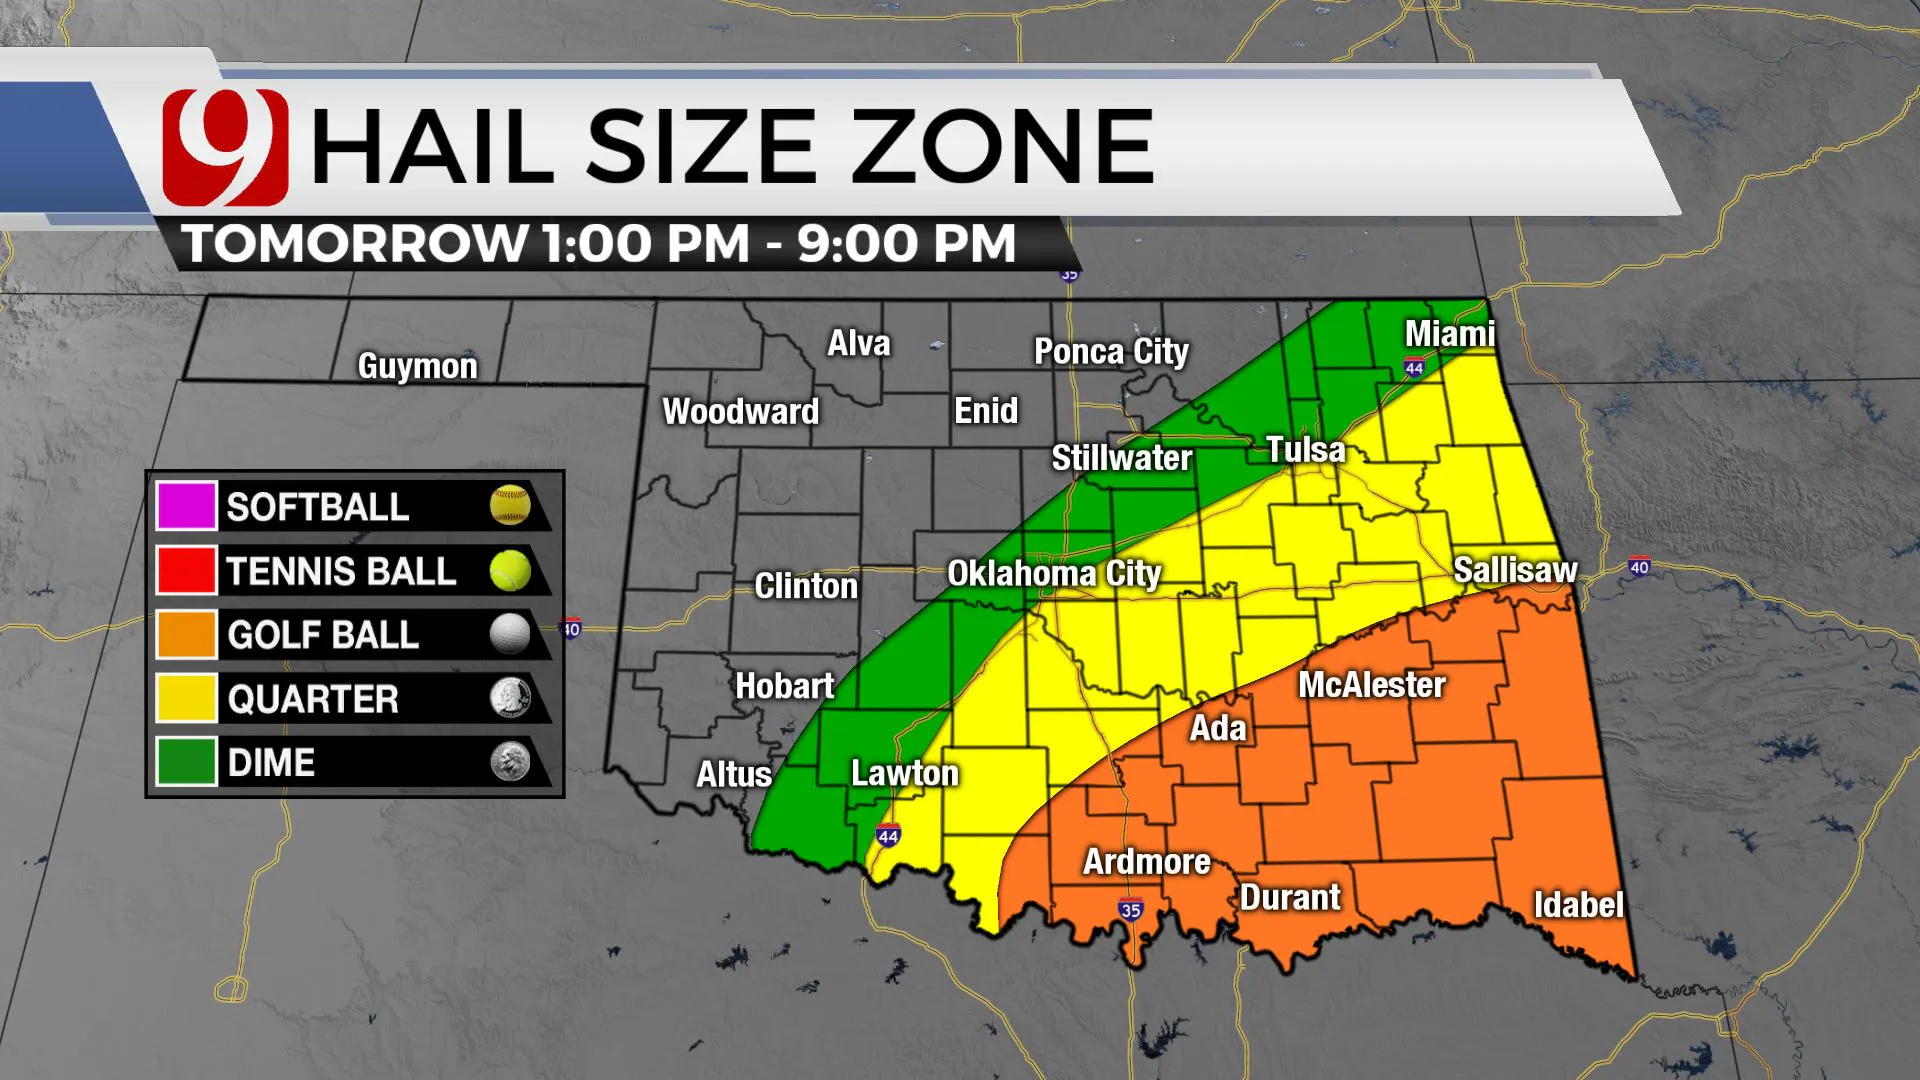 Hail size zone on Thursday.